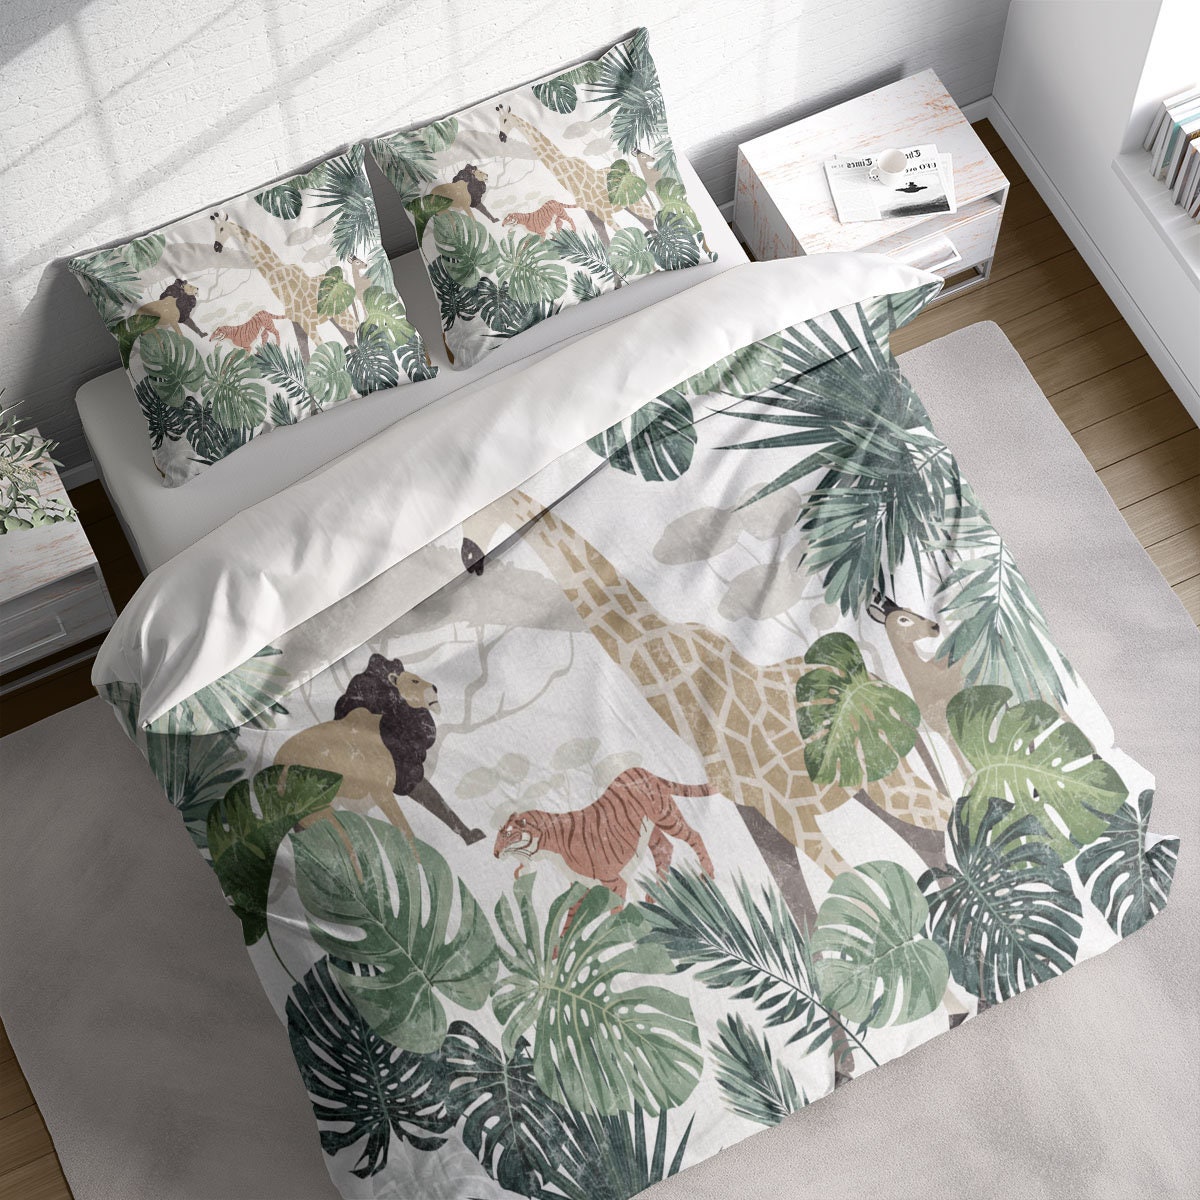 Cute Baby Lion Bedding Safari, Duvet Cover Set & Pillowcase, Zipper Be